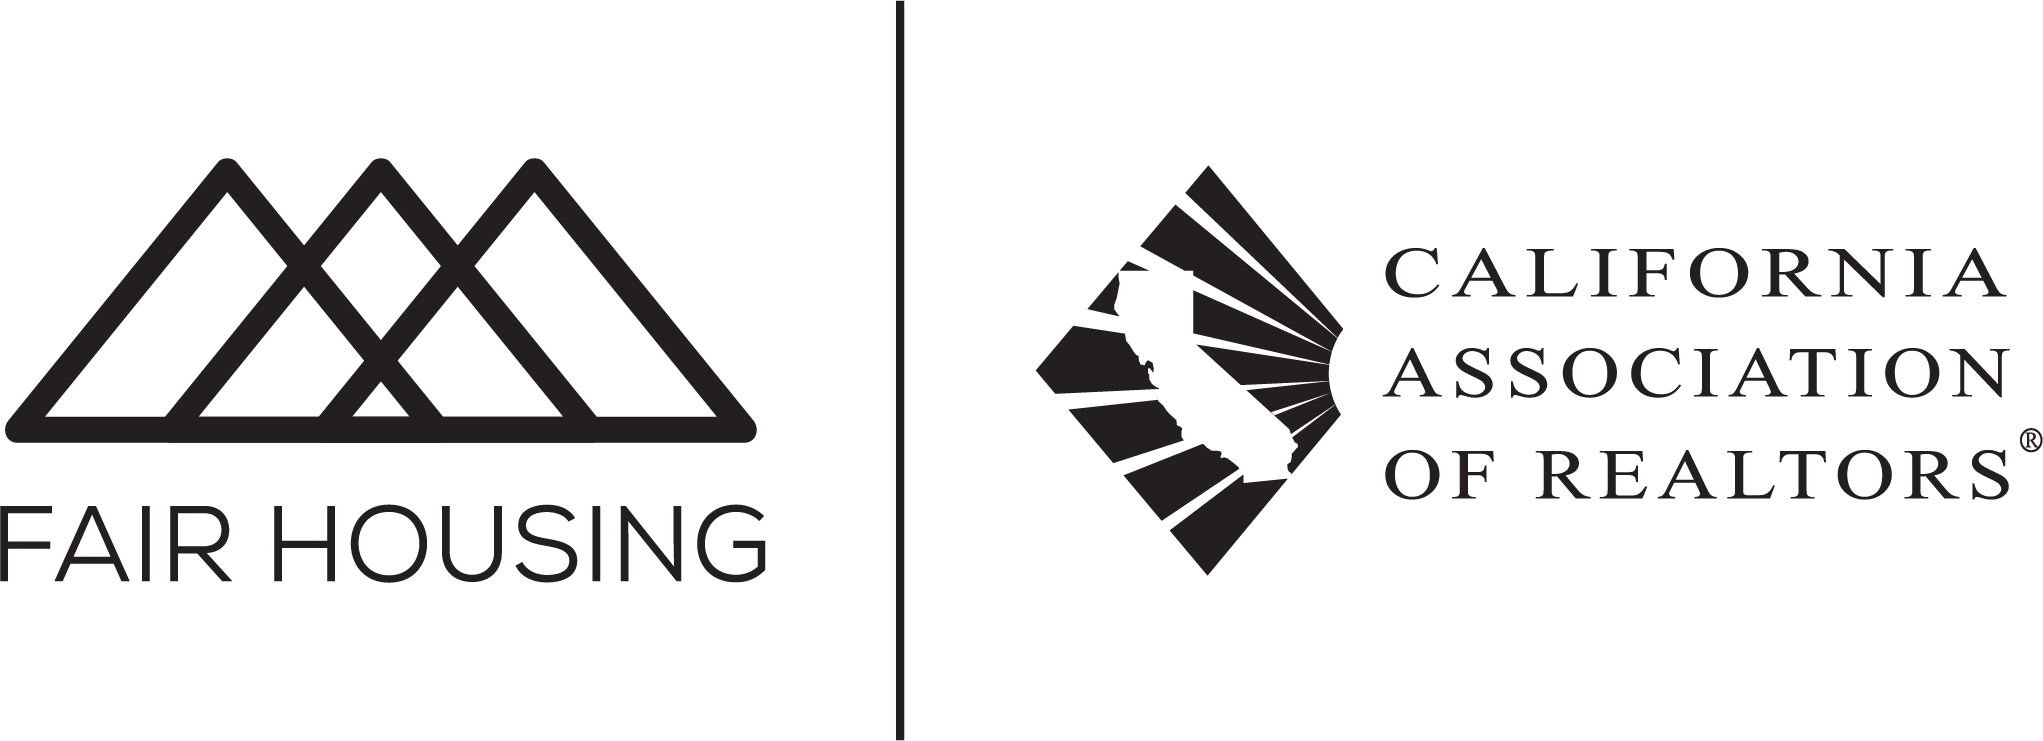 Fair Housing Logo PNG Image HD